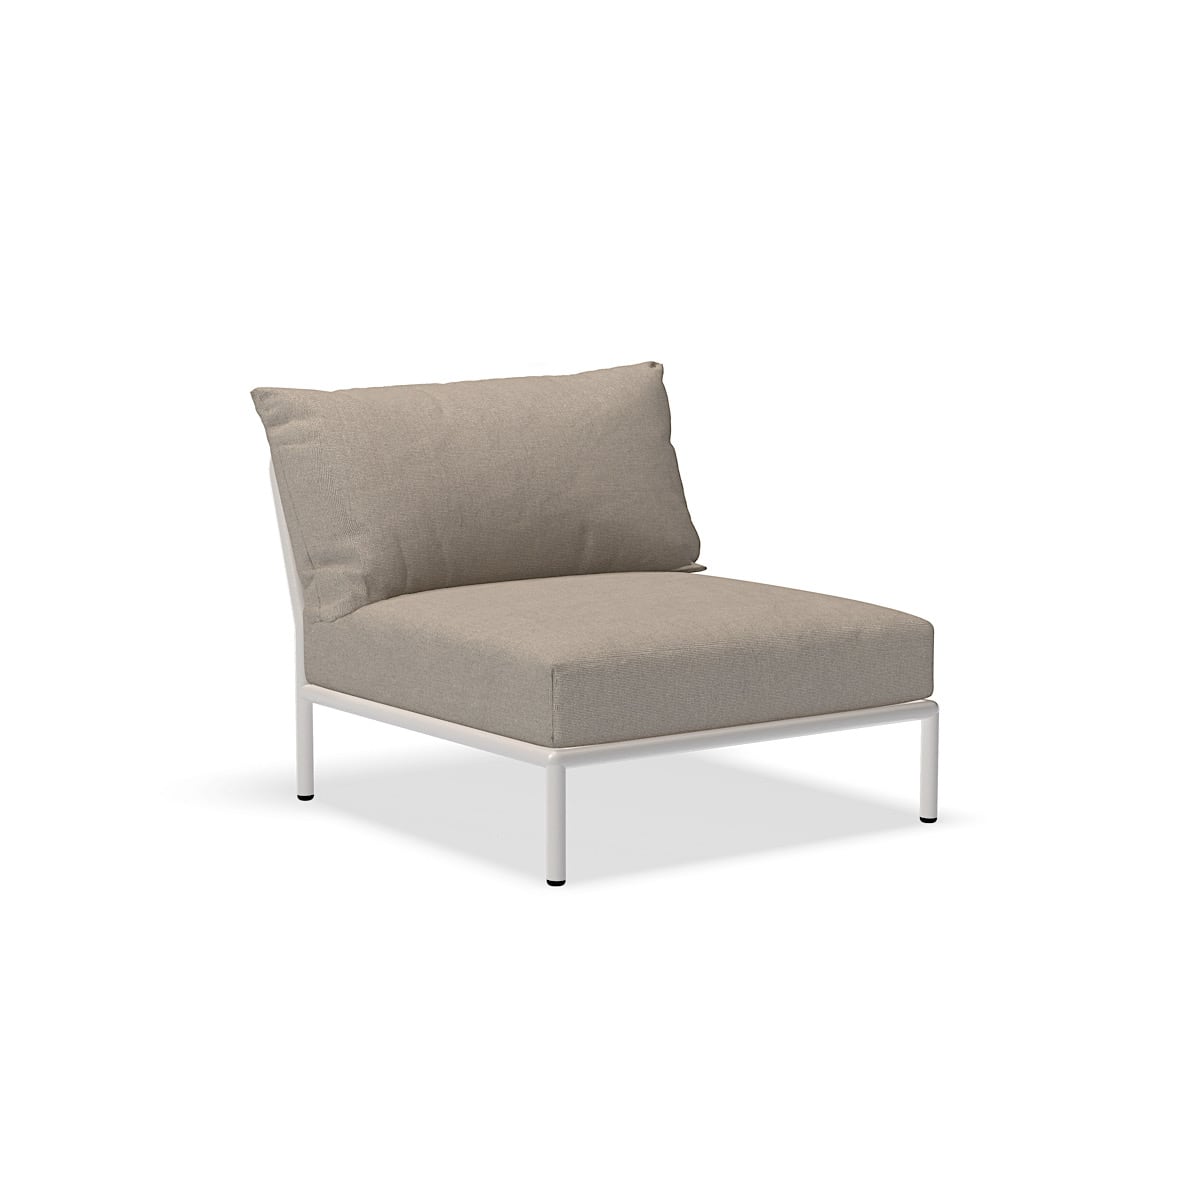 椅子：92.5 x 81 x 68.5 釐米（長 x 寬 x 高） - 22205-9243 - 椅子， 白蠟木 （HERITAGE）， 白色結構式